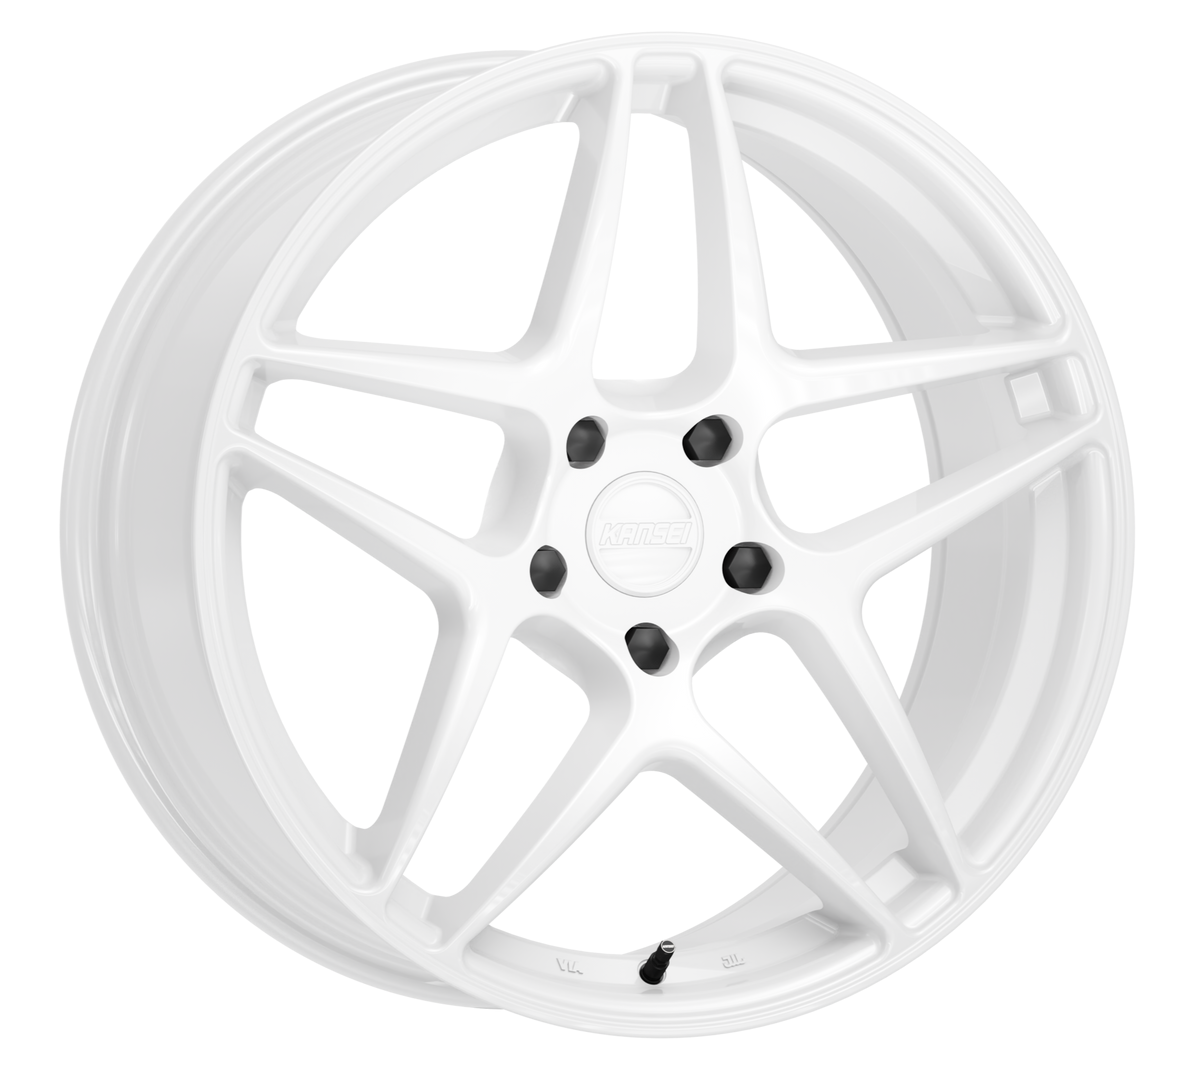 K15W ASTRO Wheel, Size: 19" x 9.50", Bolt Pattern: 5 x 112 mm, Backspace: 6.12" [Finish: Gloss White]